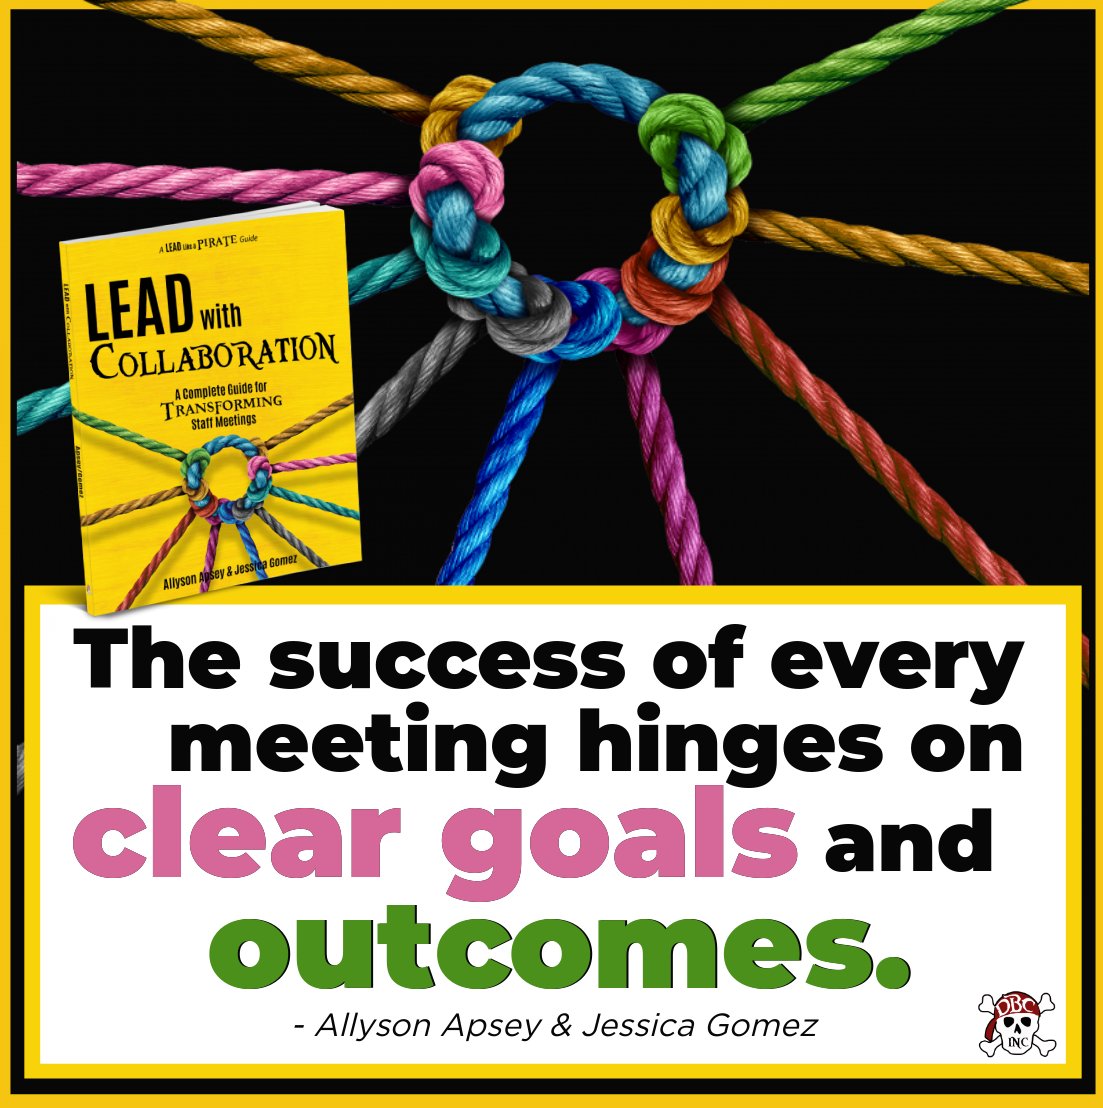 Clear goals...it's key! Need ideas? We've got YOU! #LeadWithCollaboration by @AllysonApsey @mrsjessgomez 📖 amazon.com/Lead-Collabora… #LeadLAP #dbcincbooks #tlap @burgessdave @TaraMartinEDU